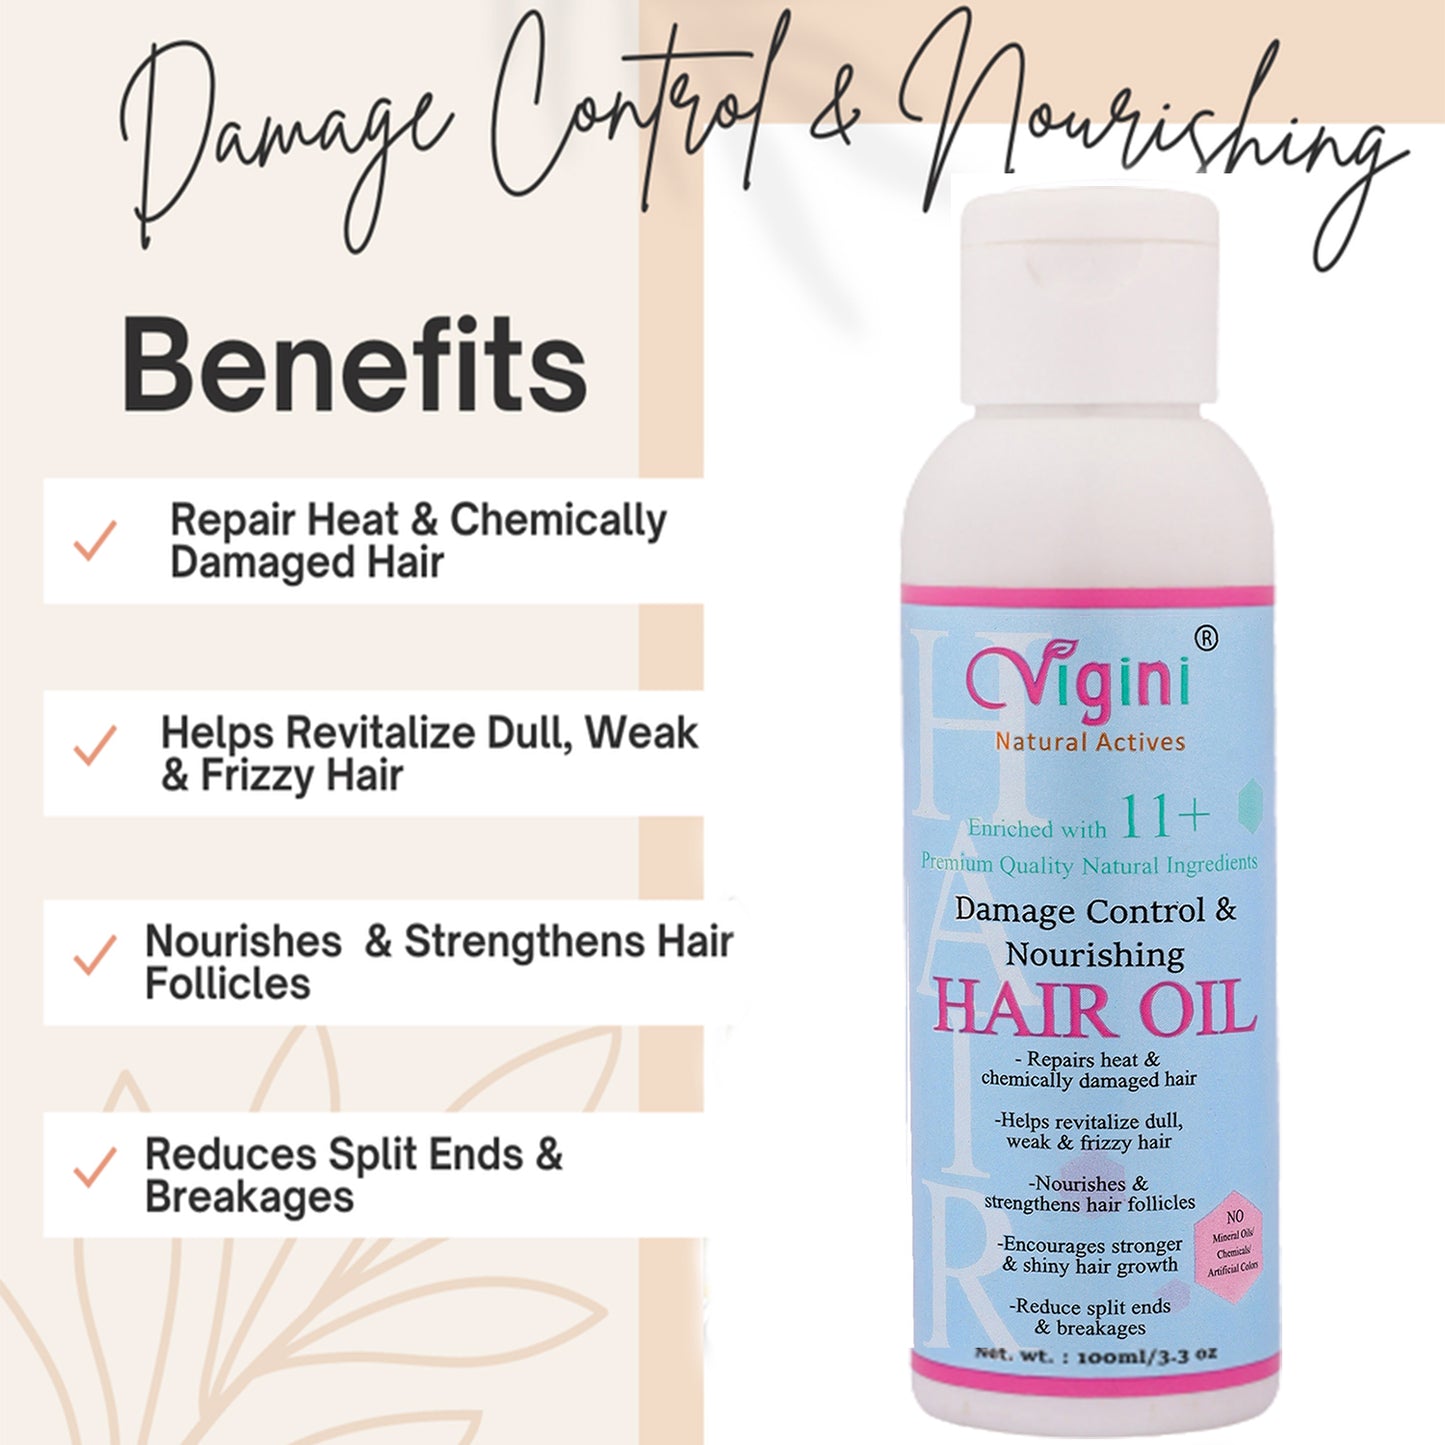 Damage Control & Nourishing Hair Oil